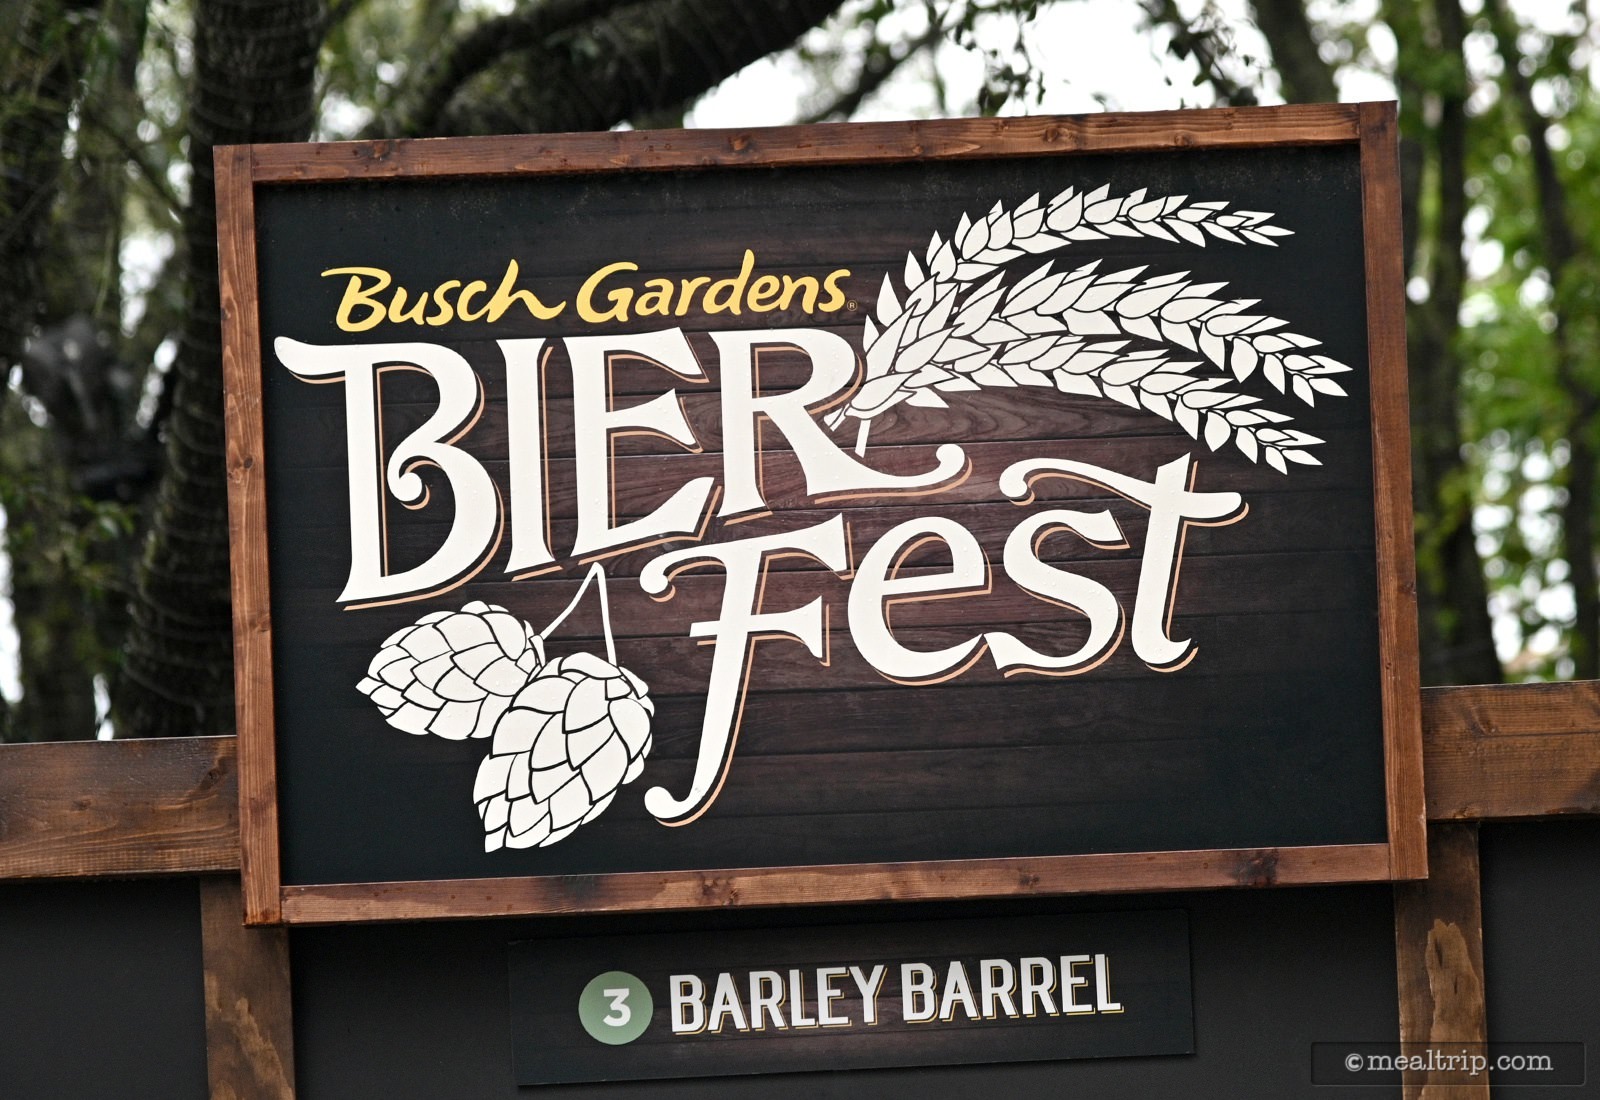 Busch Gardens Bier Fest Menu Boards with Prices for 2019